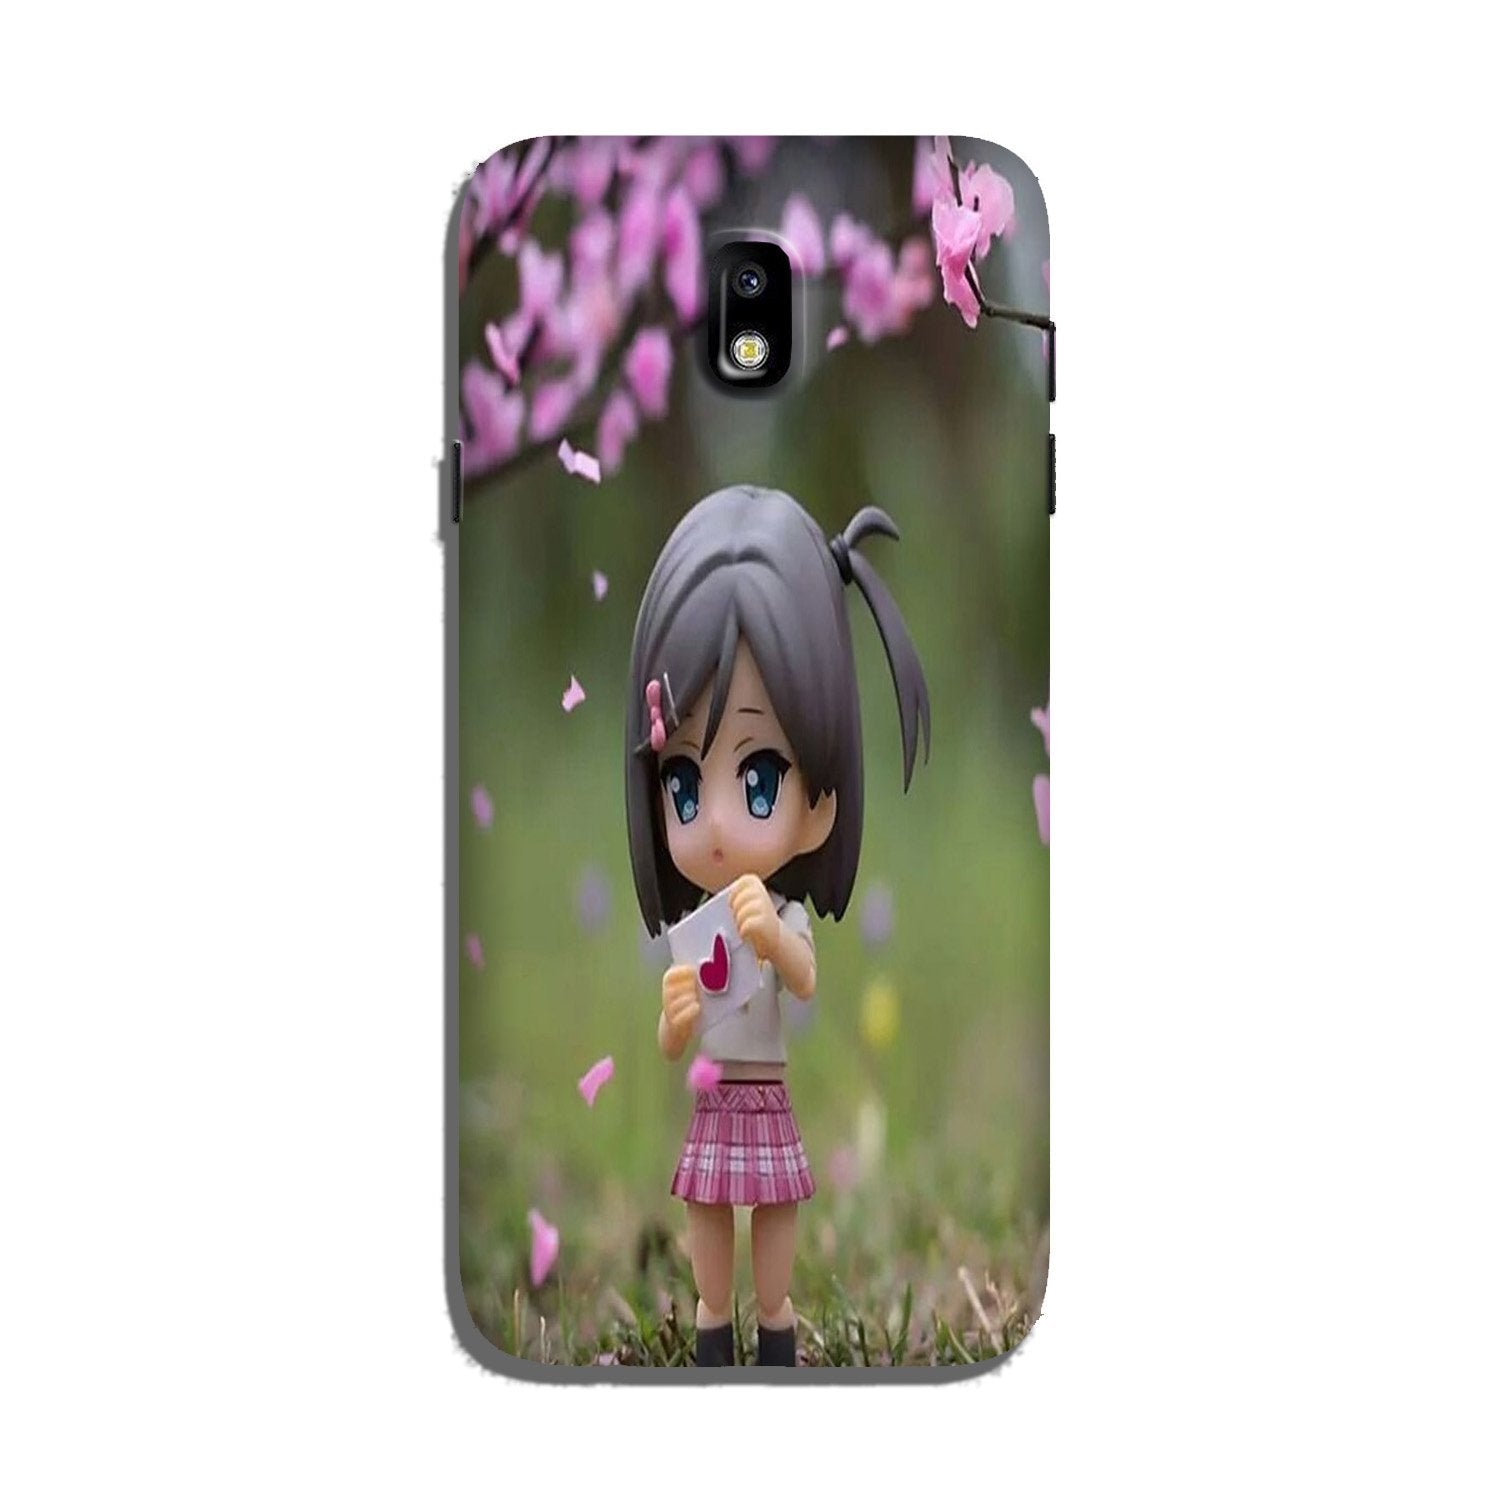 Cute Girl Case for Galaxy J5 Pro